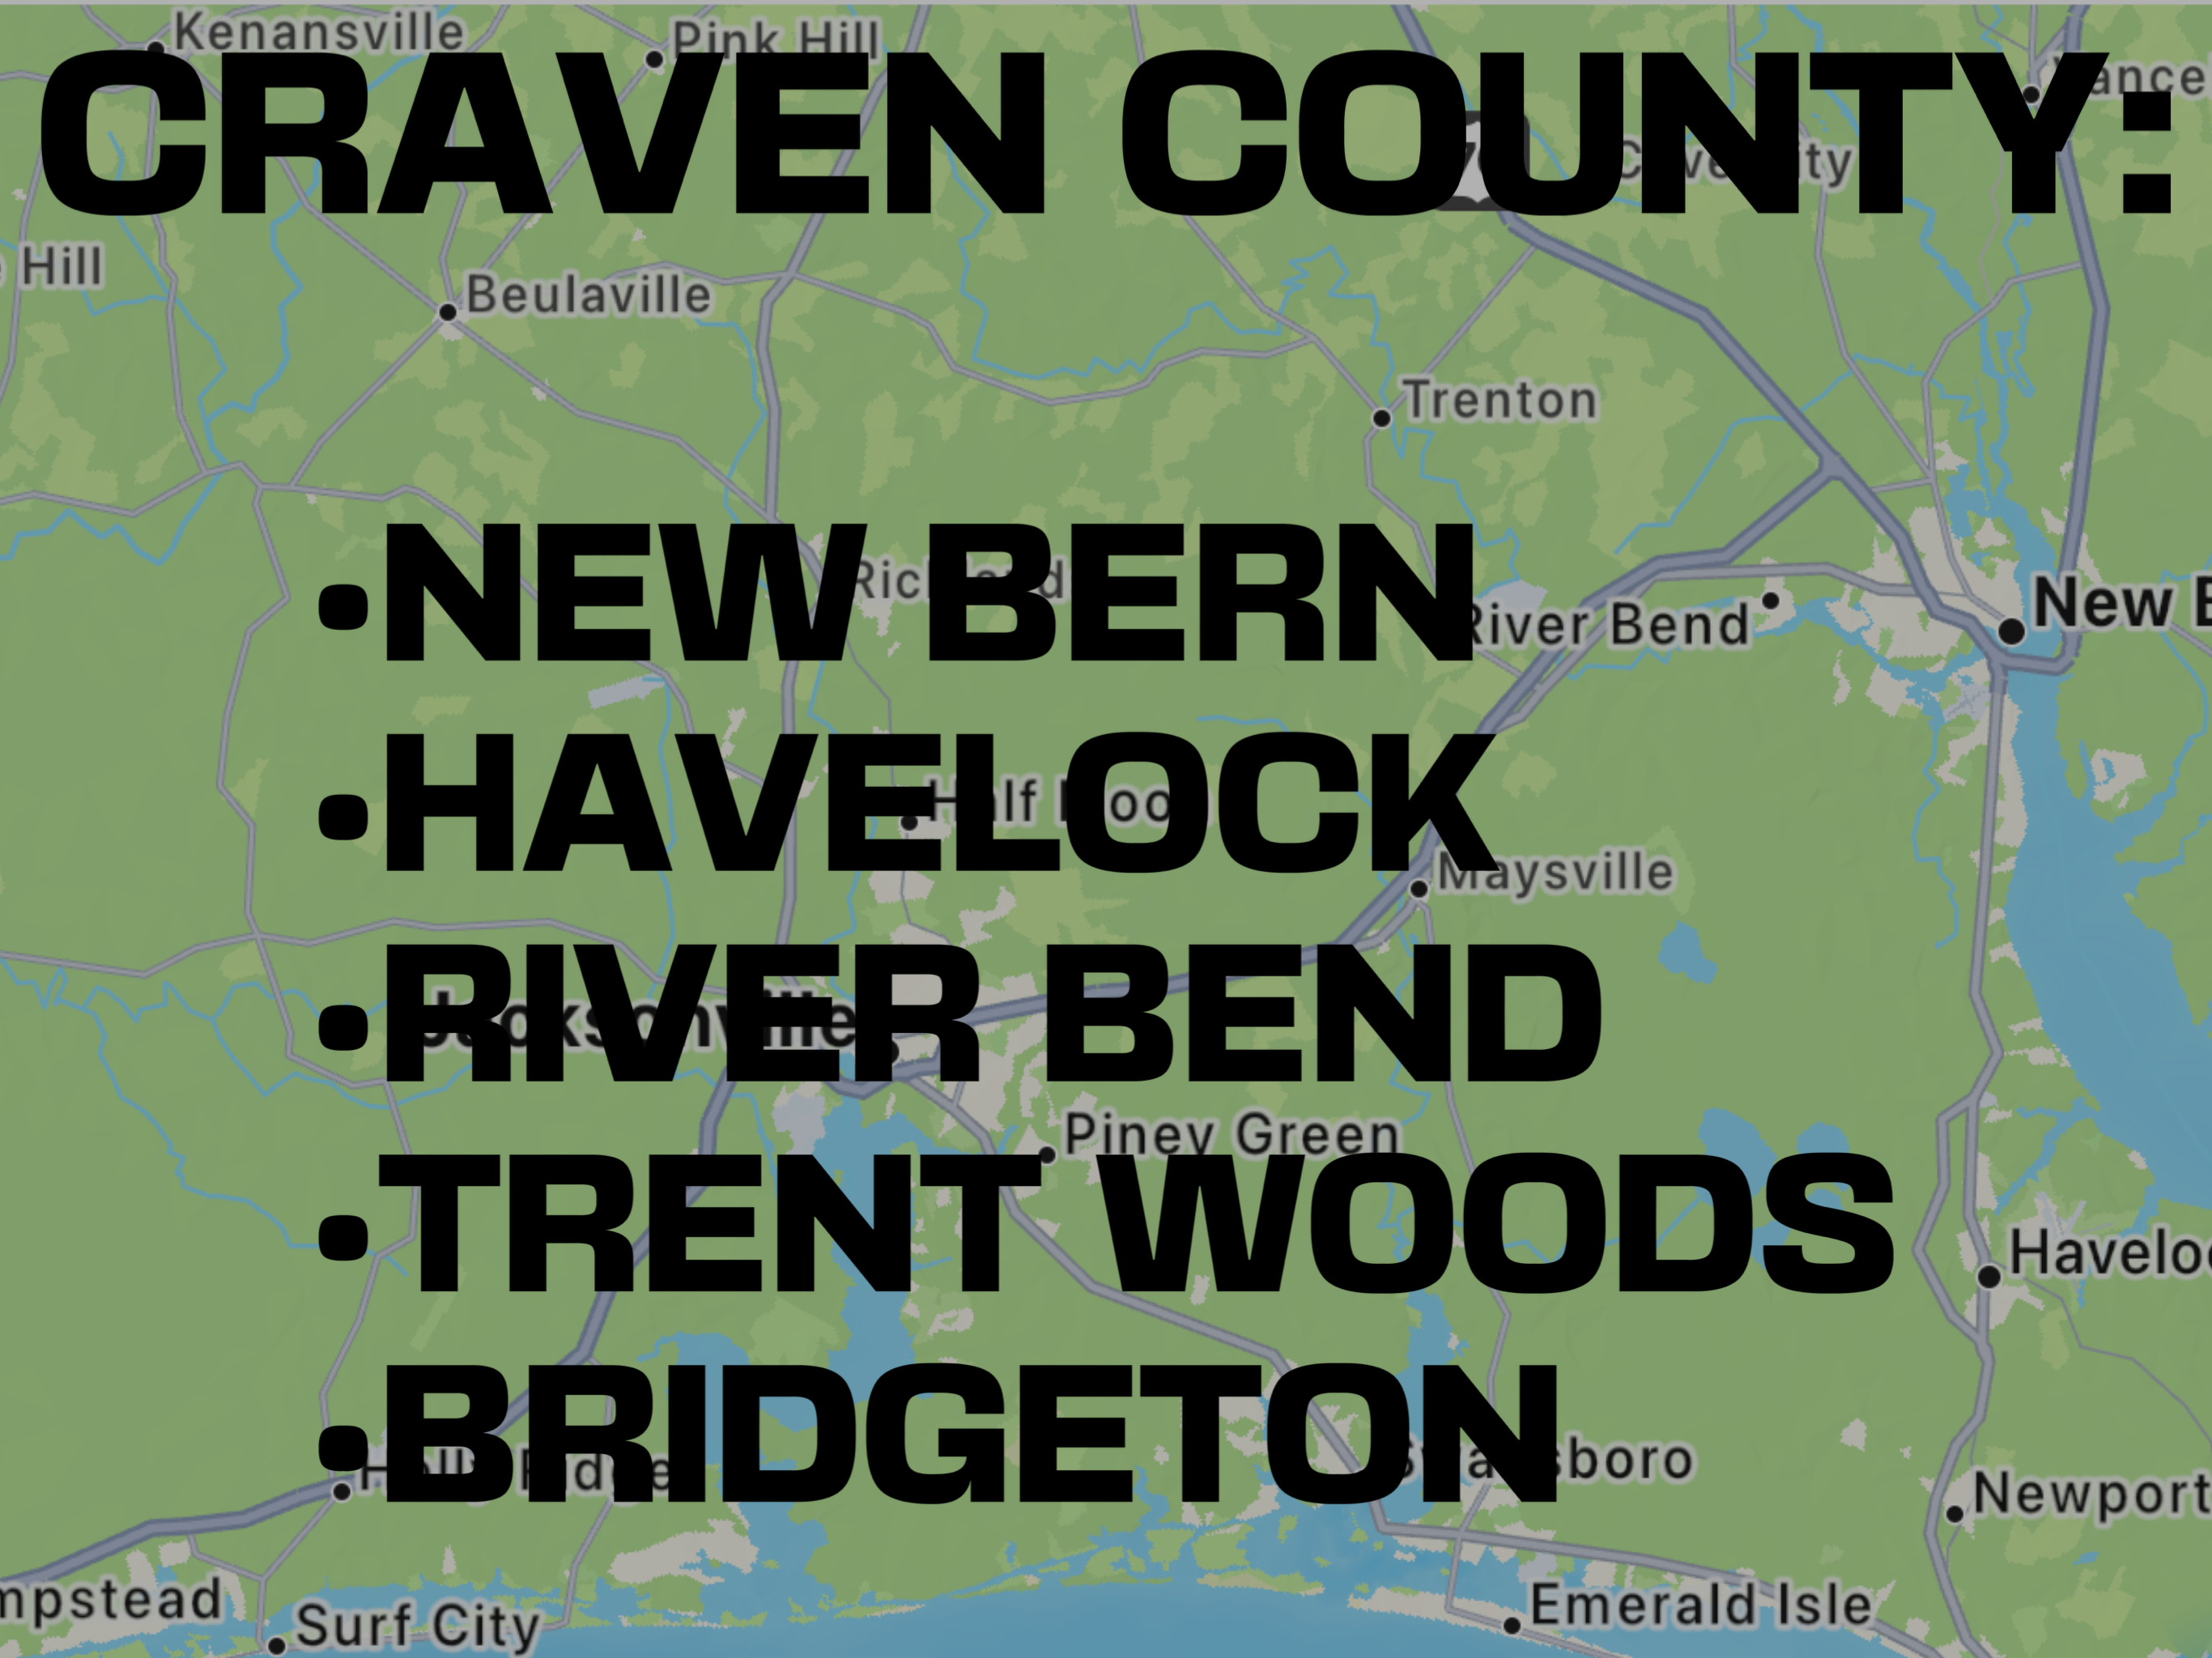 Carolina EartHWerx serves craven county North Carolina which consists of new Bern, havelock, river bend, Trent woods, and Bridgeton.